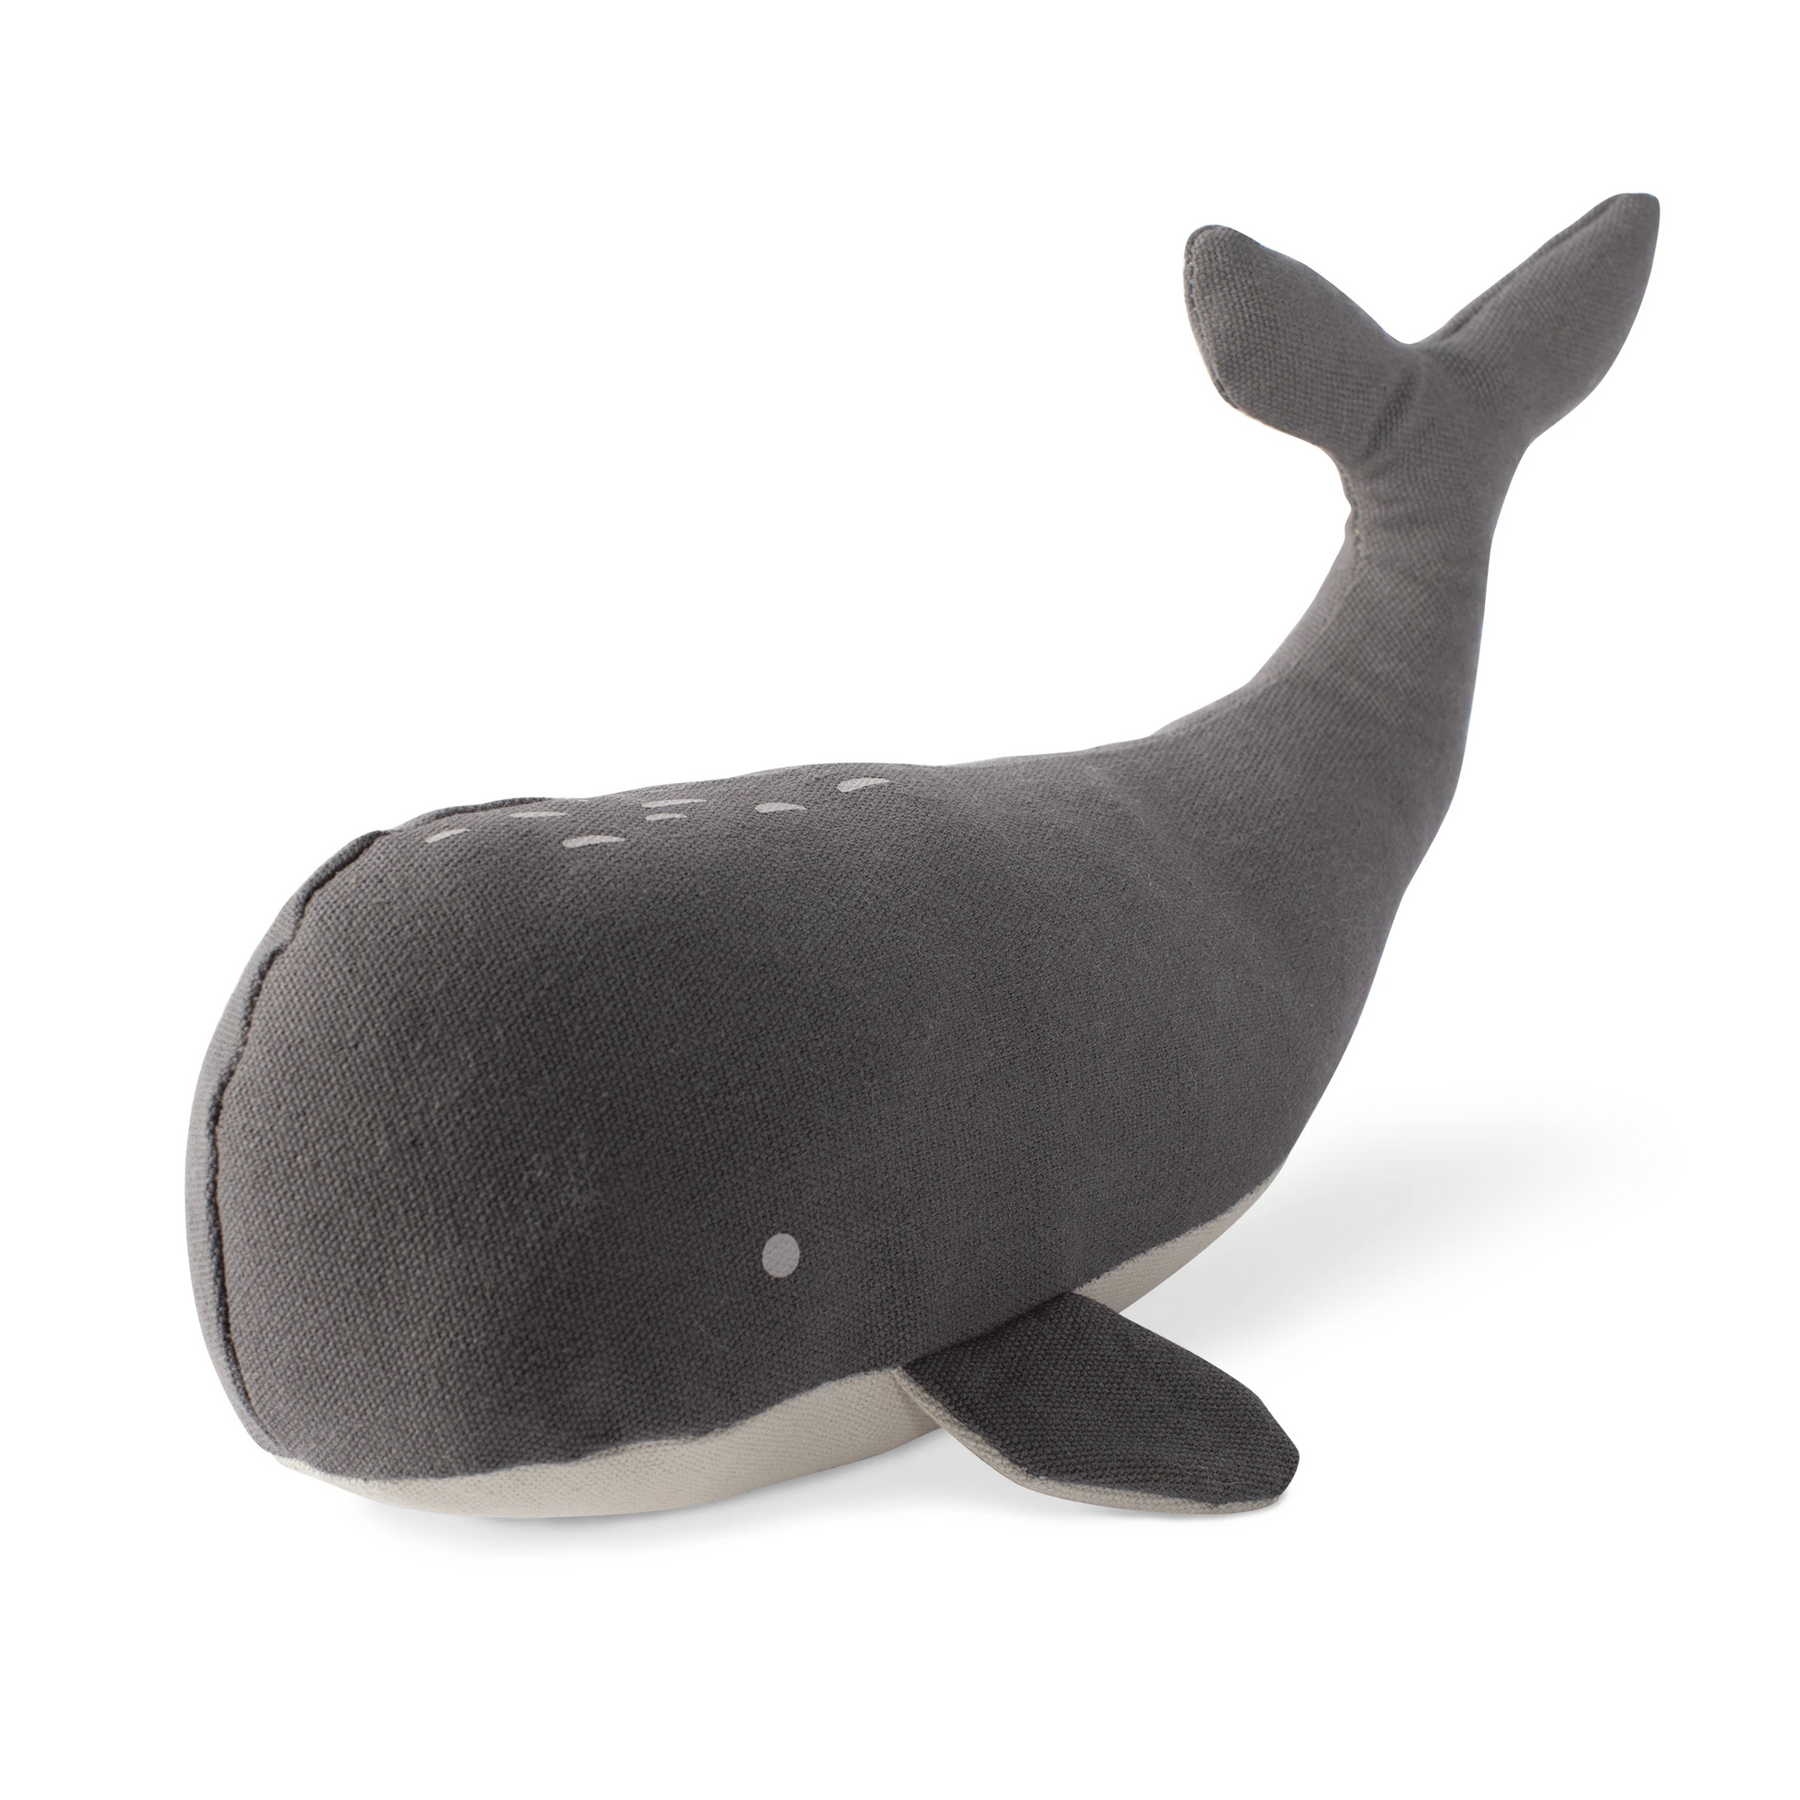 Fringe Studio Canvas Dog Squeaker Toy - Whale